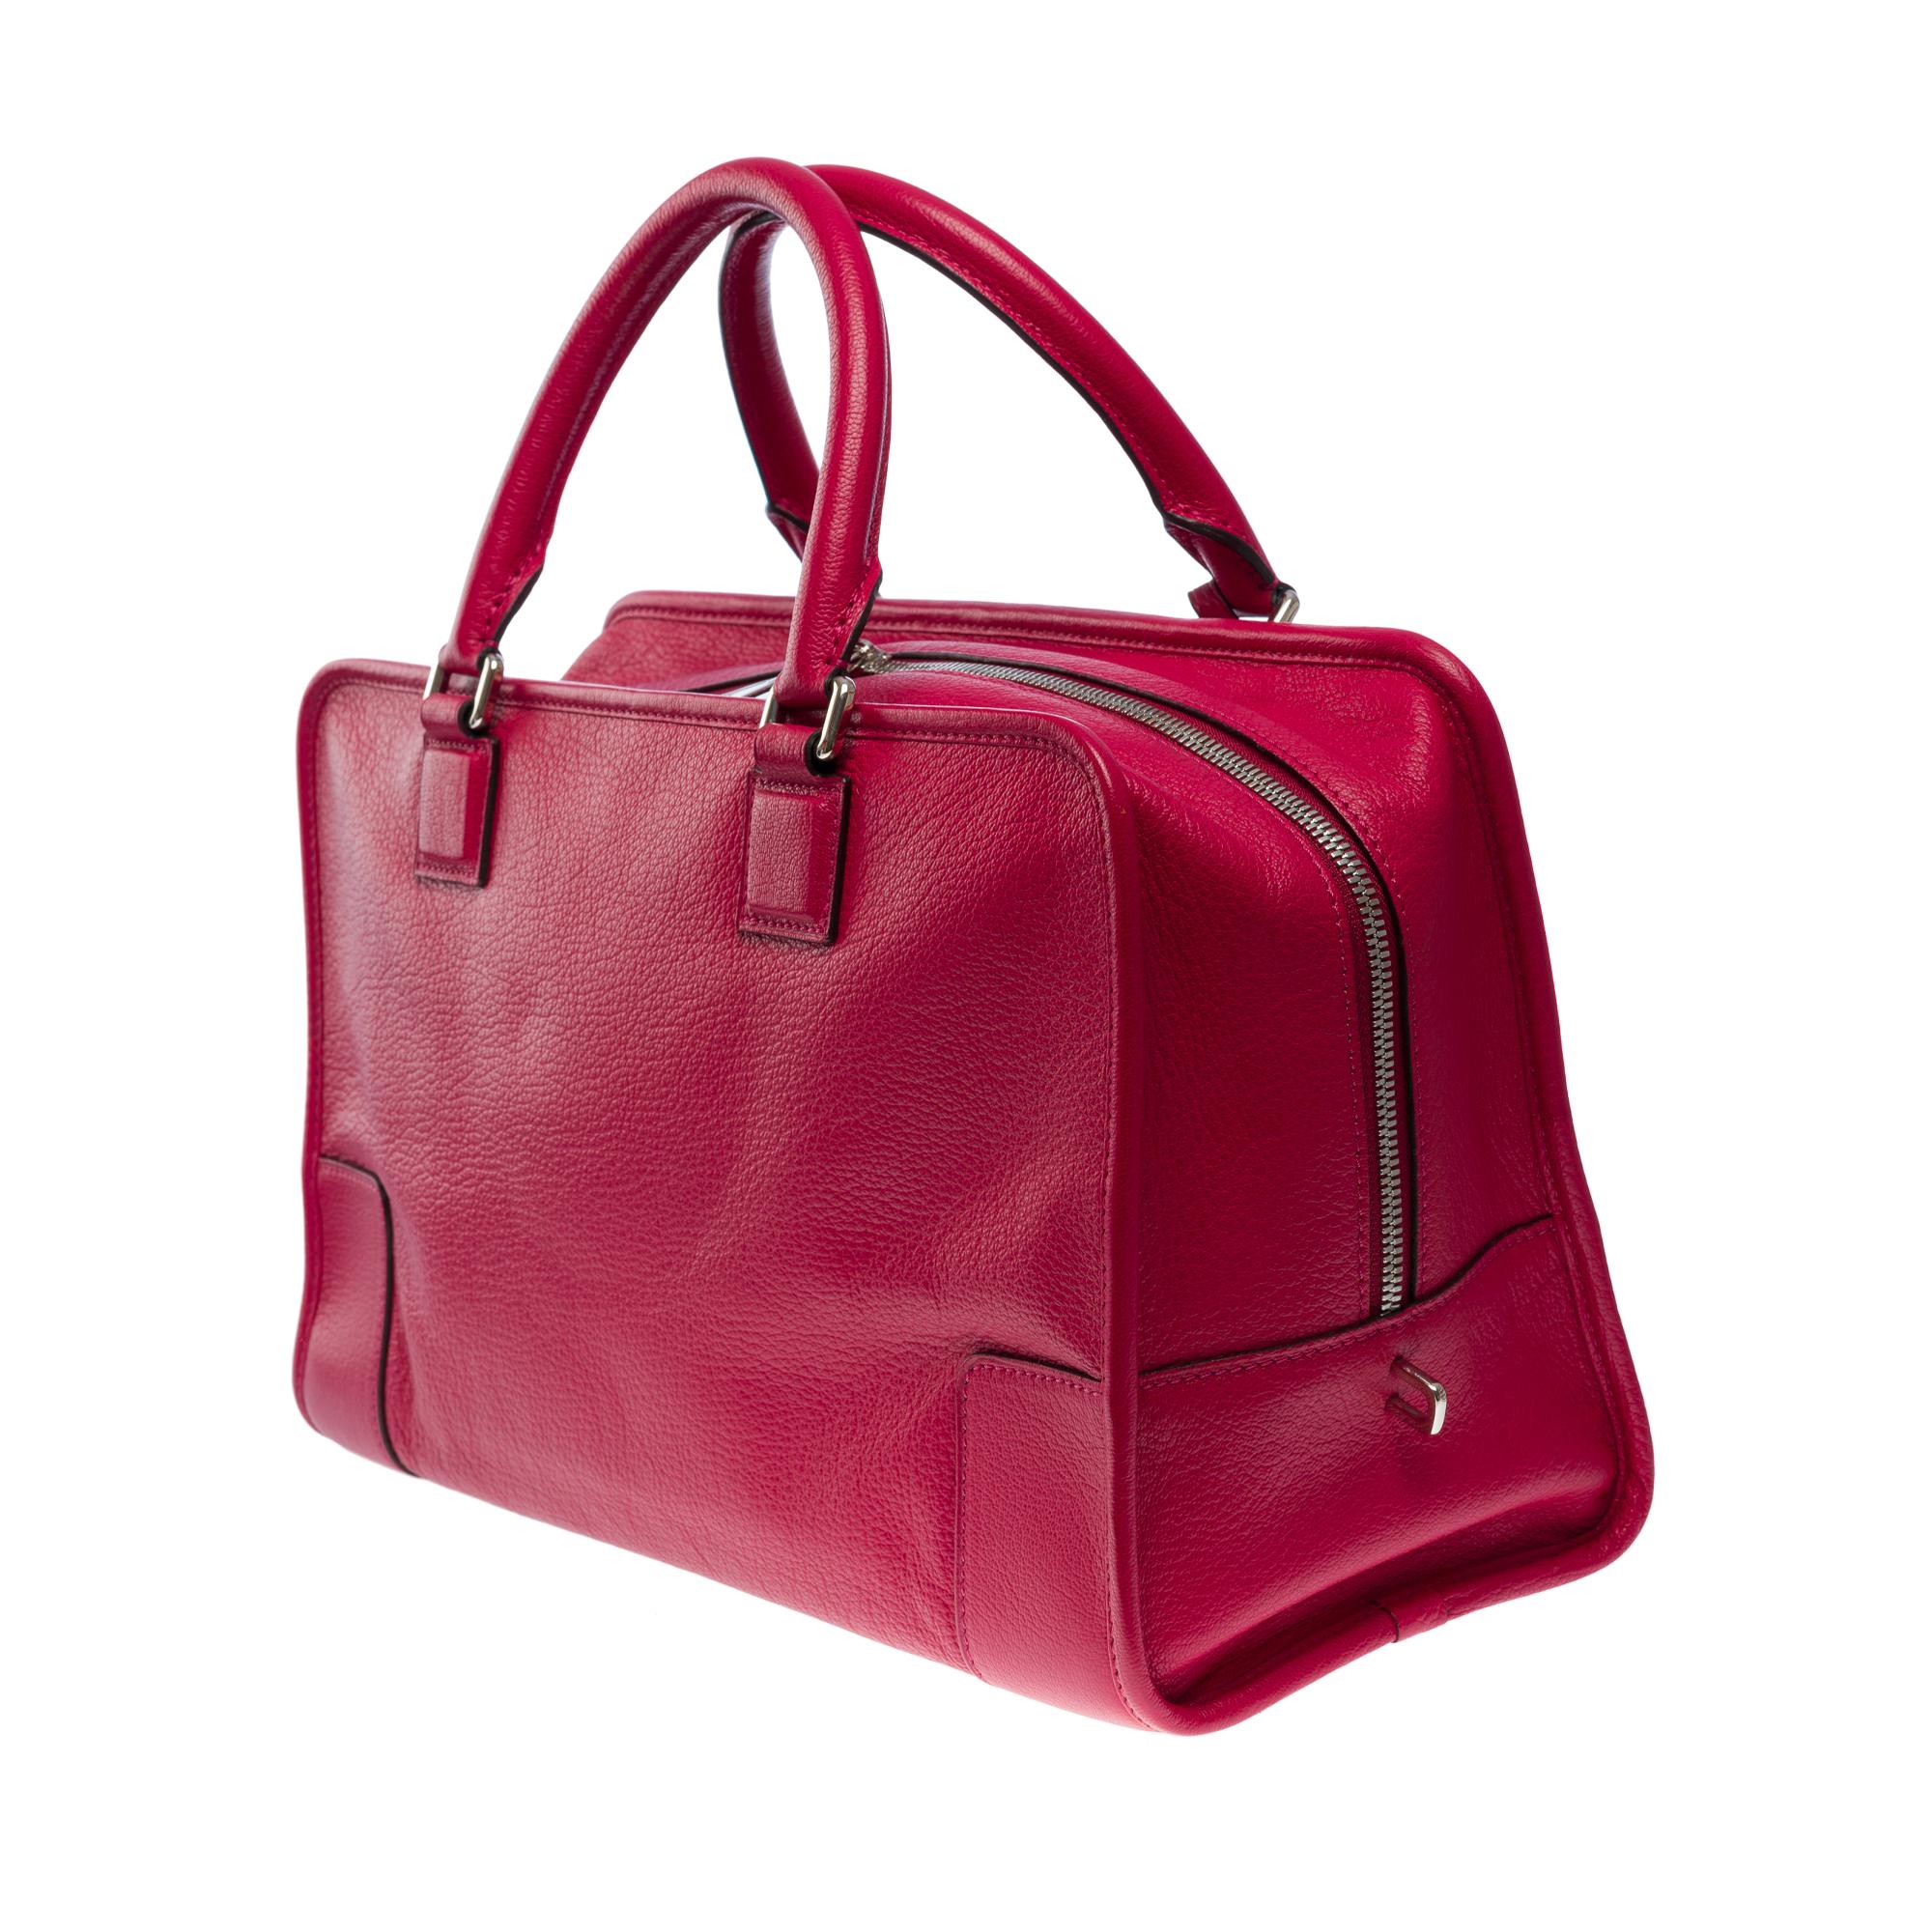 Delightful Loewe Amazona 36 (GM) handbag in red leather, SHW For Sale 2